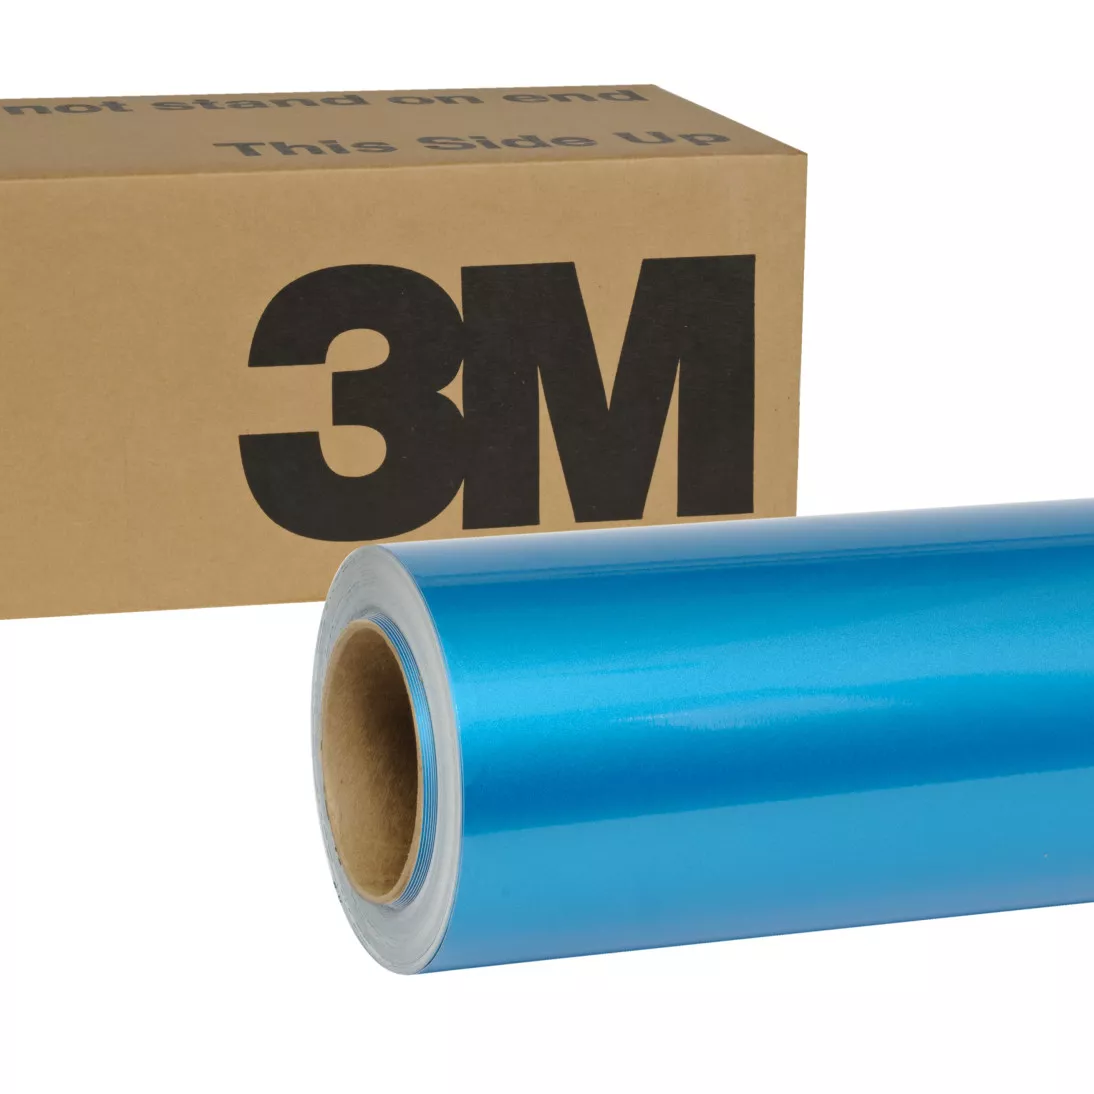 3M™ Wrap Film Series 1080-G356, Gloss Atomic Teal, 60 in x 50 yd